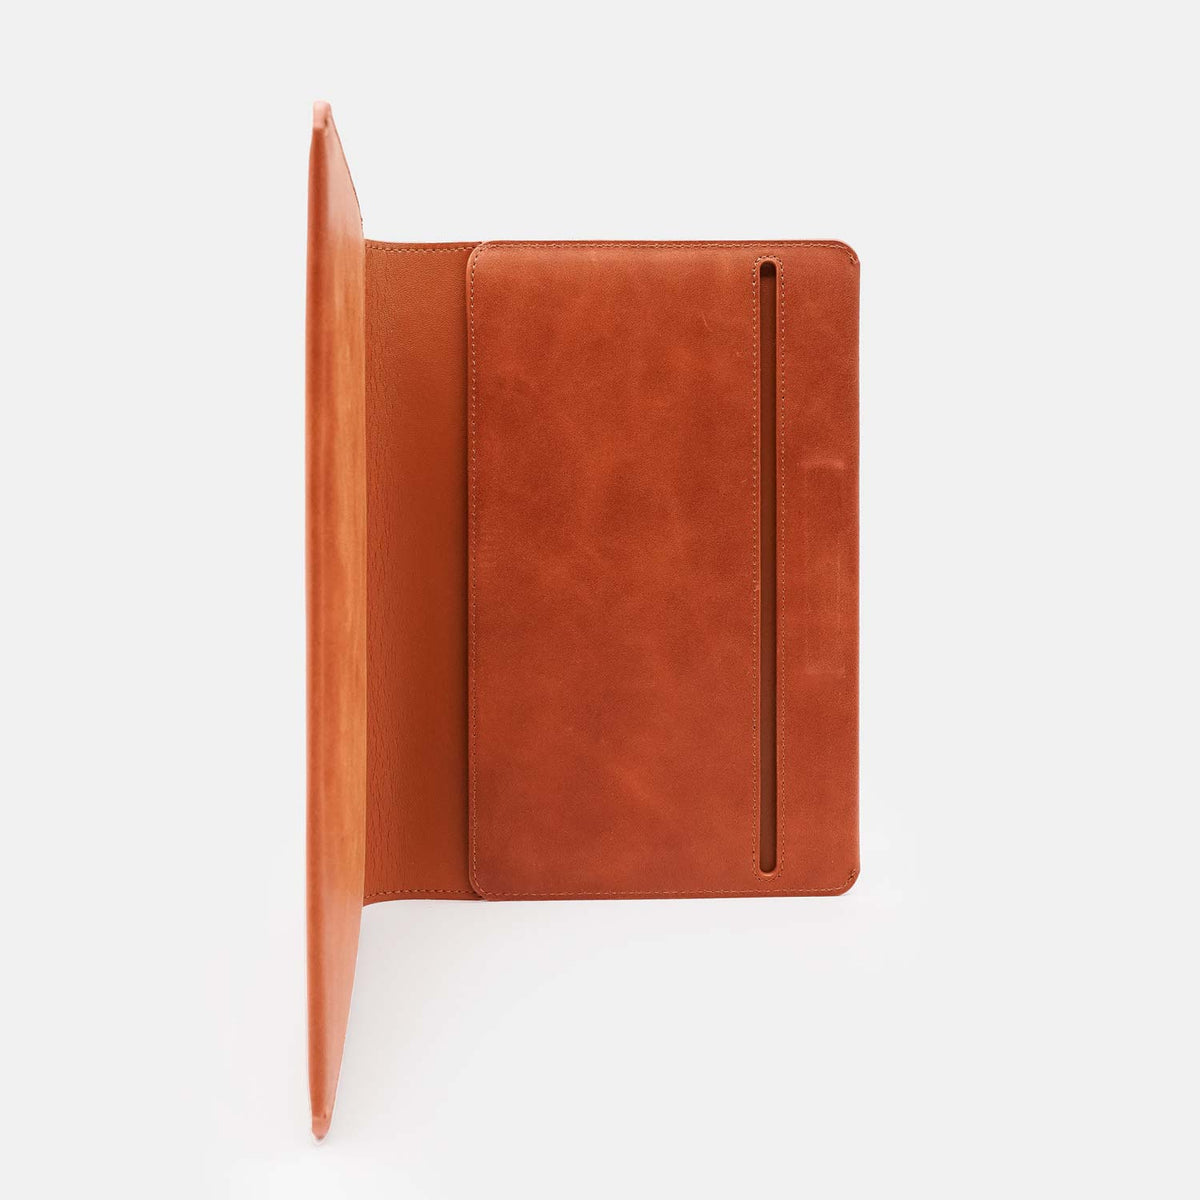 Moleskine Notebook Cover - Saddle Brown - RYAN London